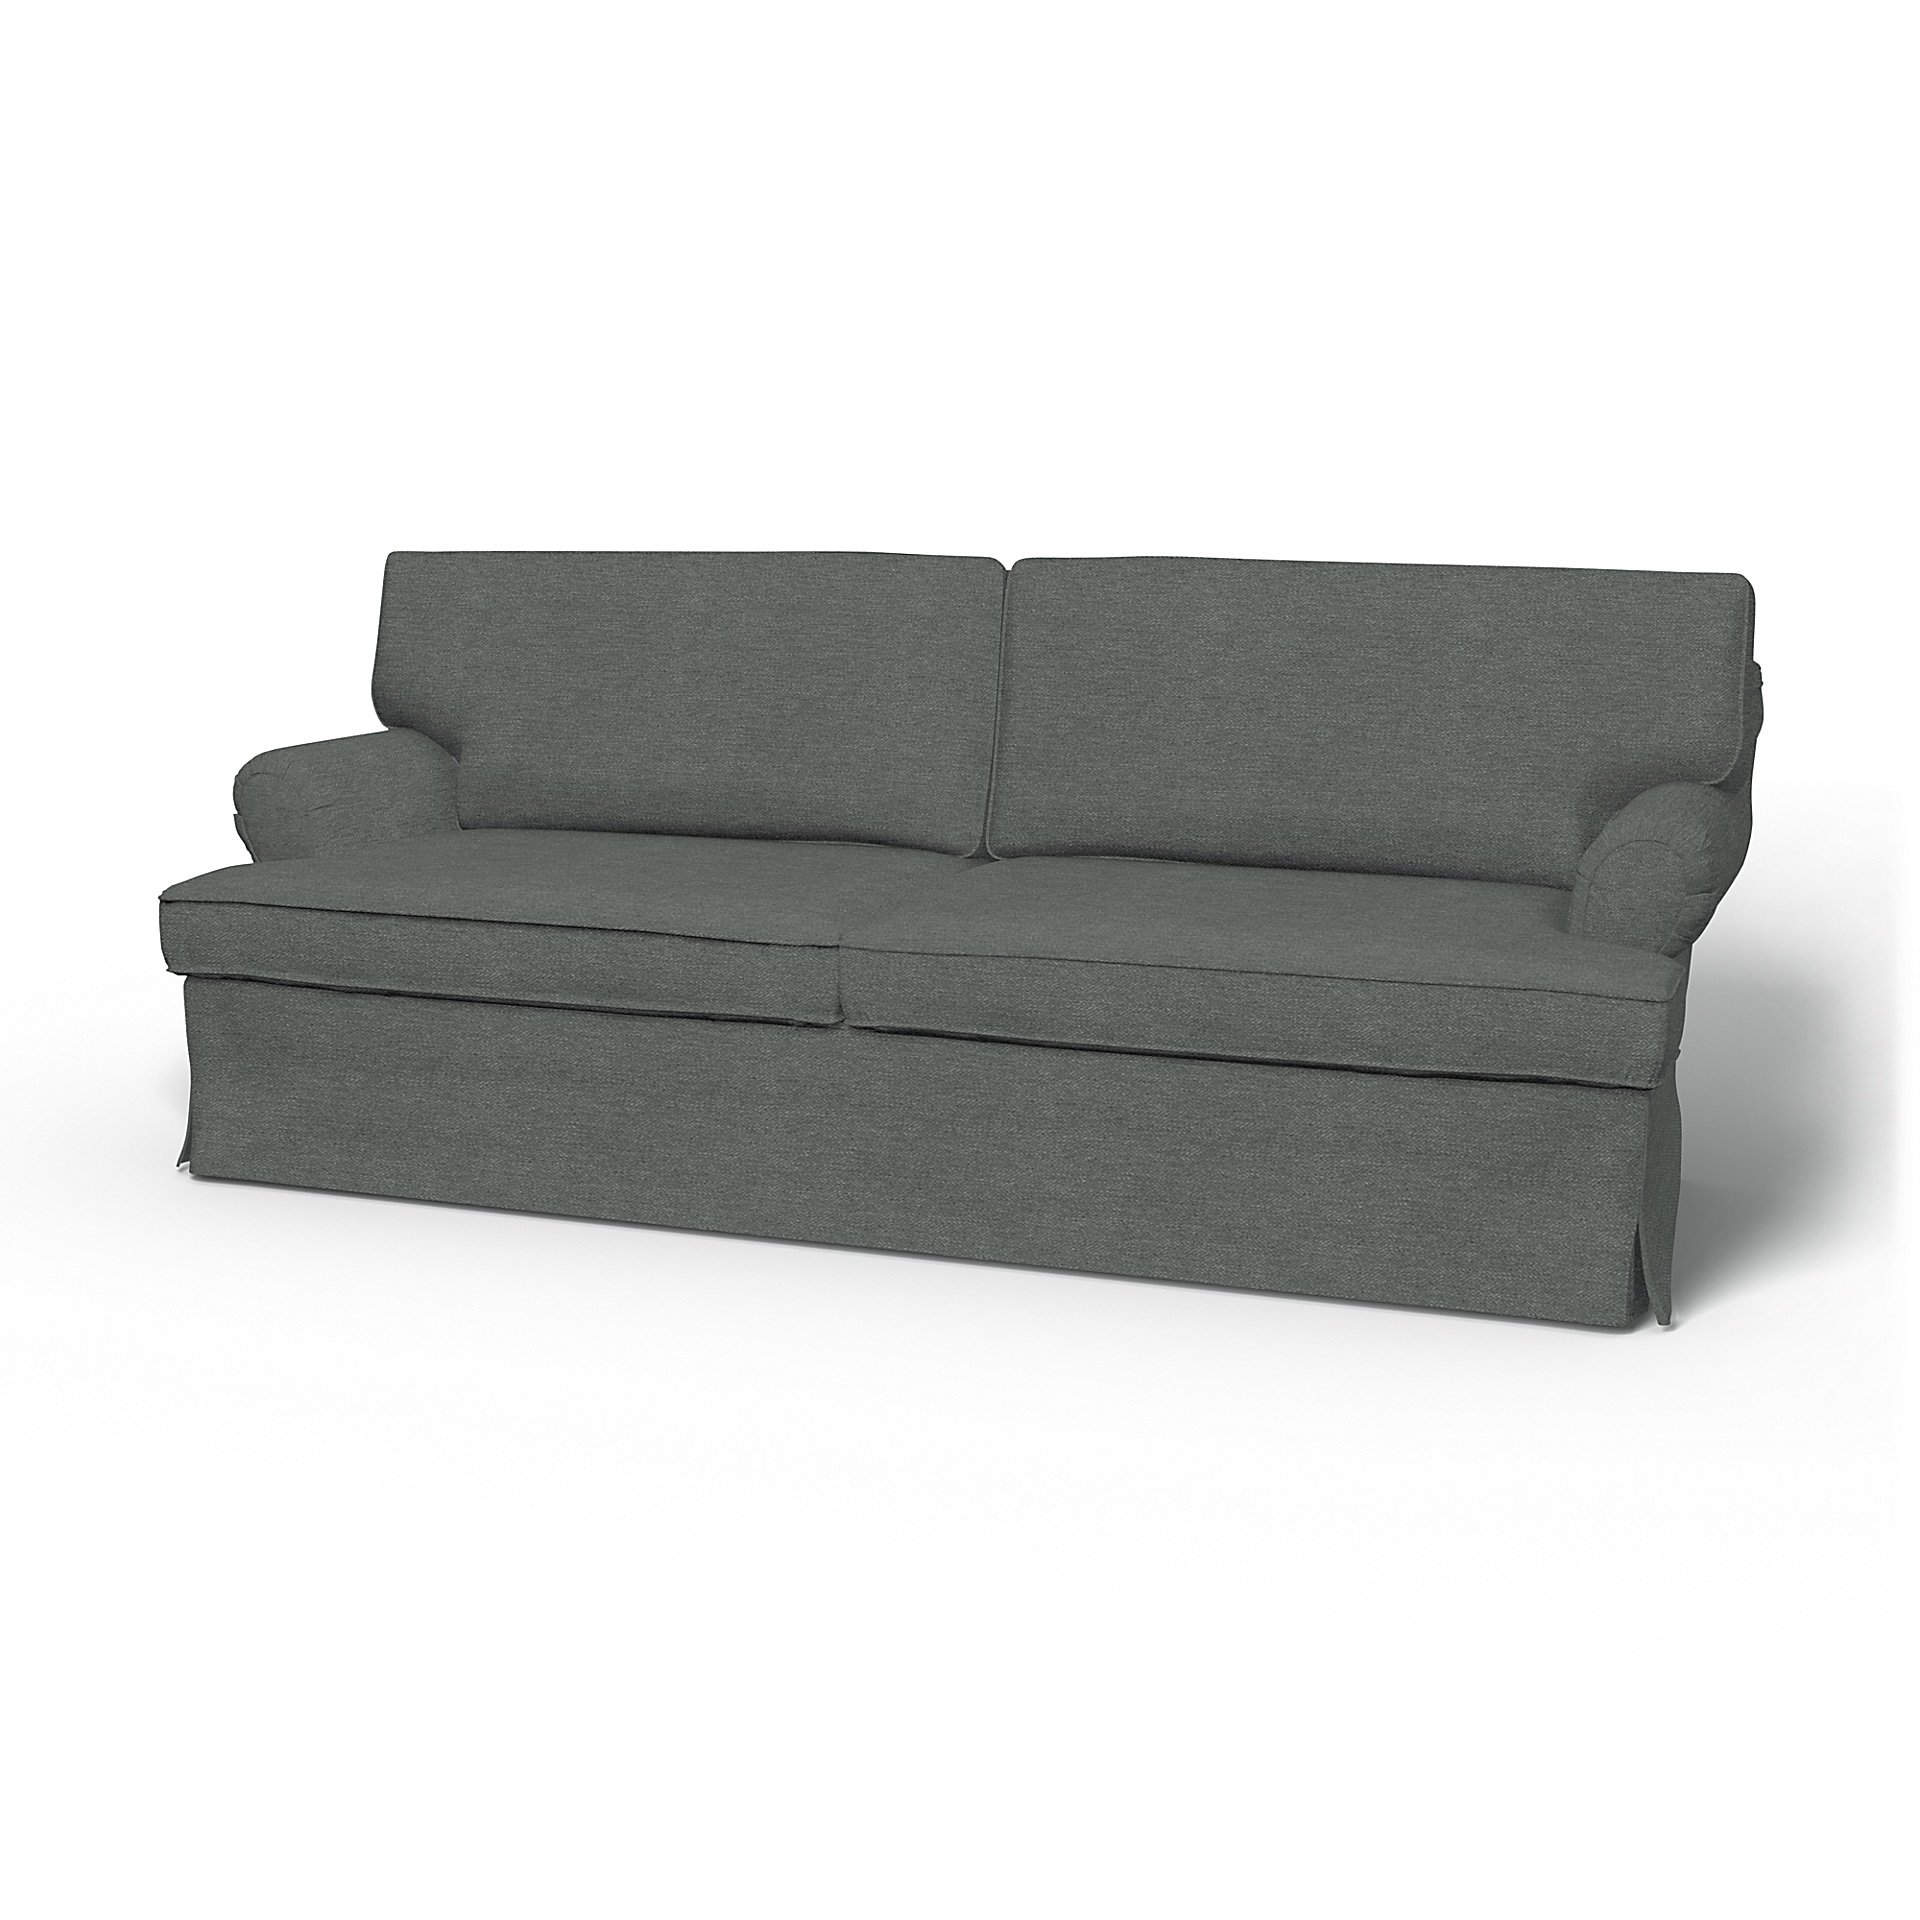 IKEA - Stockholm 3 Seater Sofa Cover (1994-2000), Laurel, Boucle & Texture - Bemz